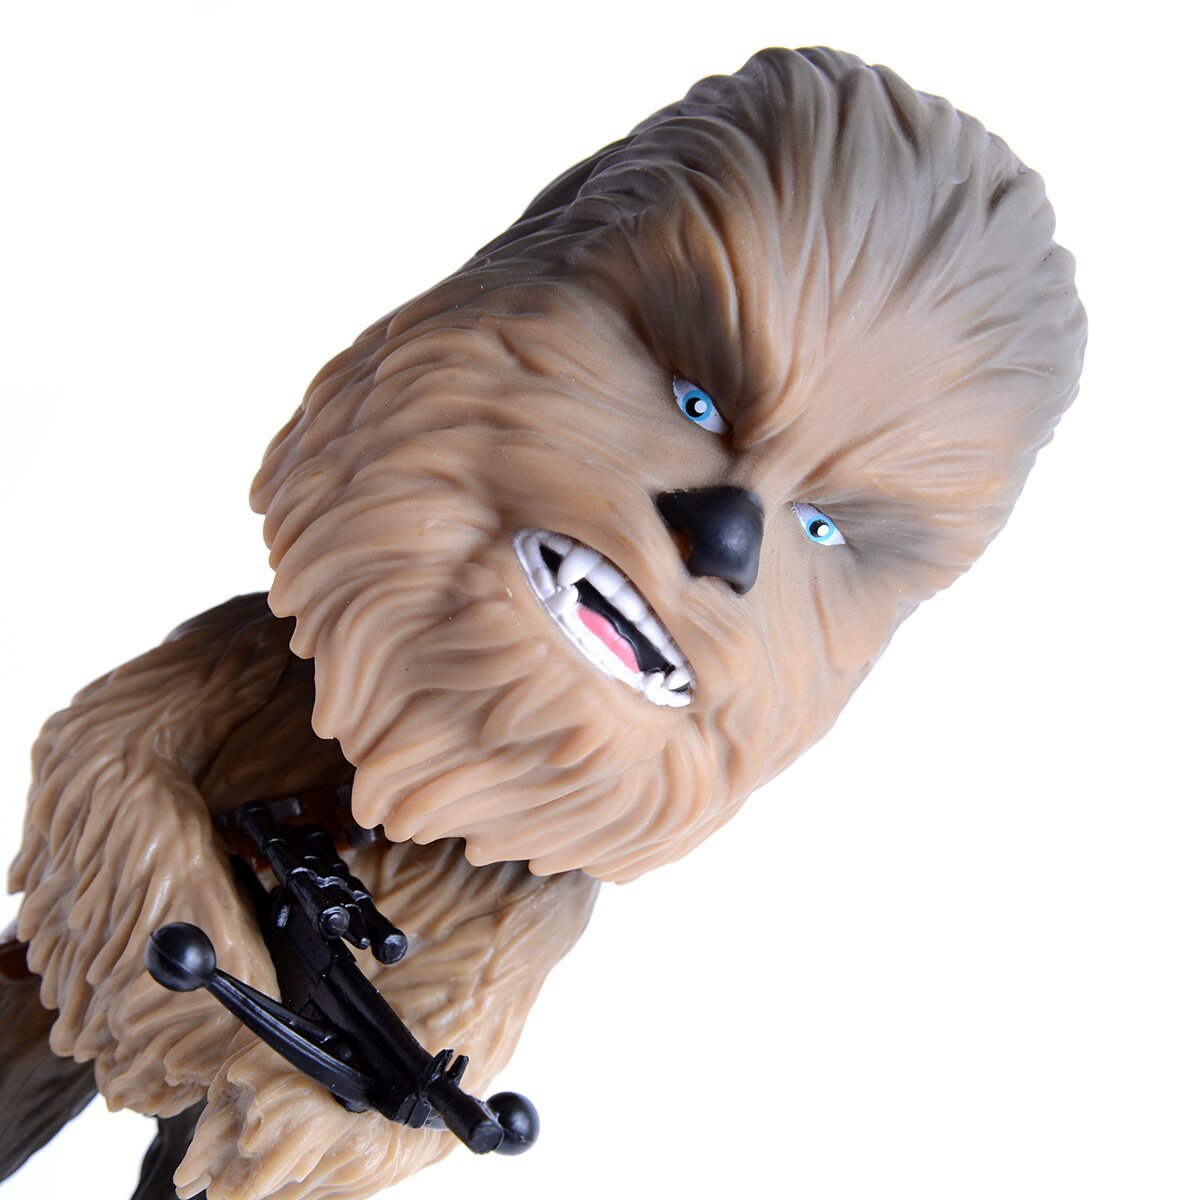 Wacky Wobbler Chewbacca | Star Wars: The Force Awakens